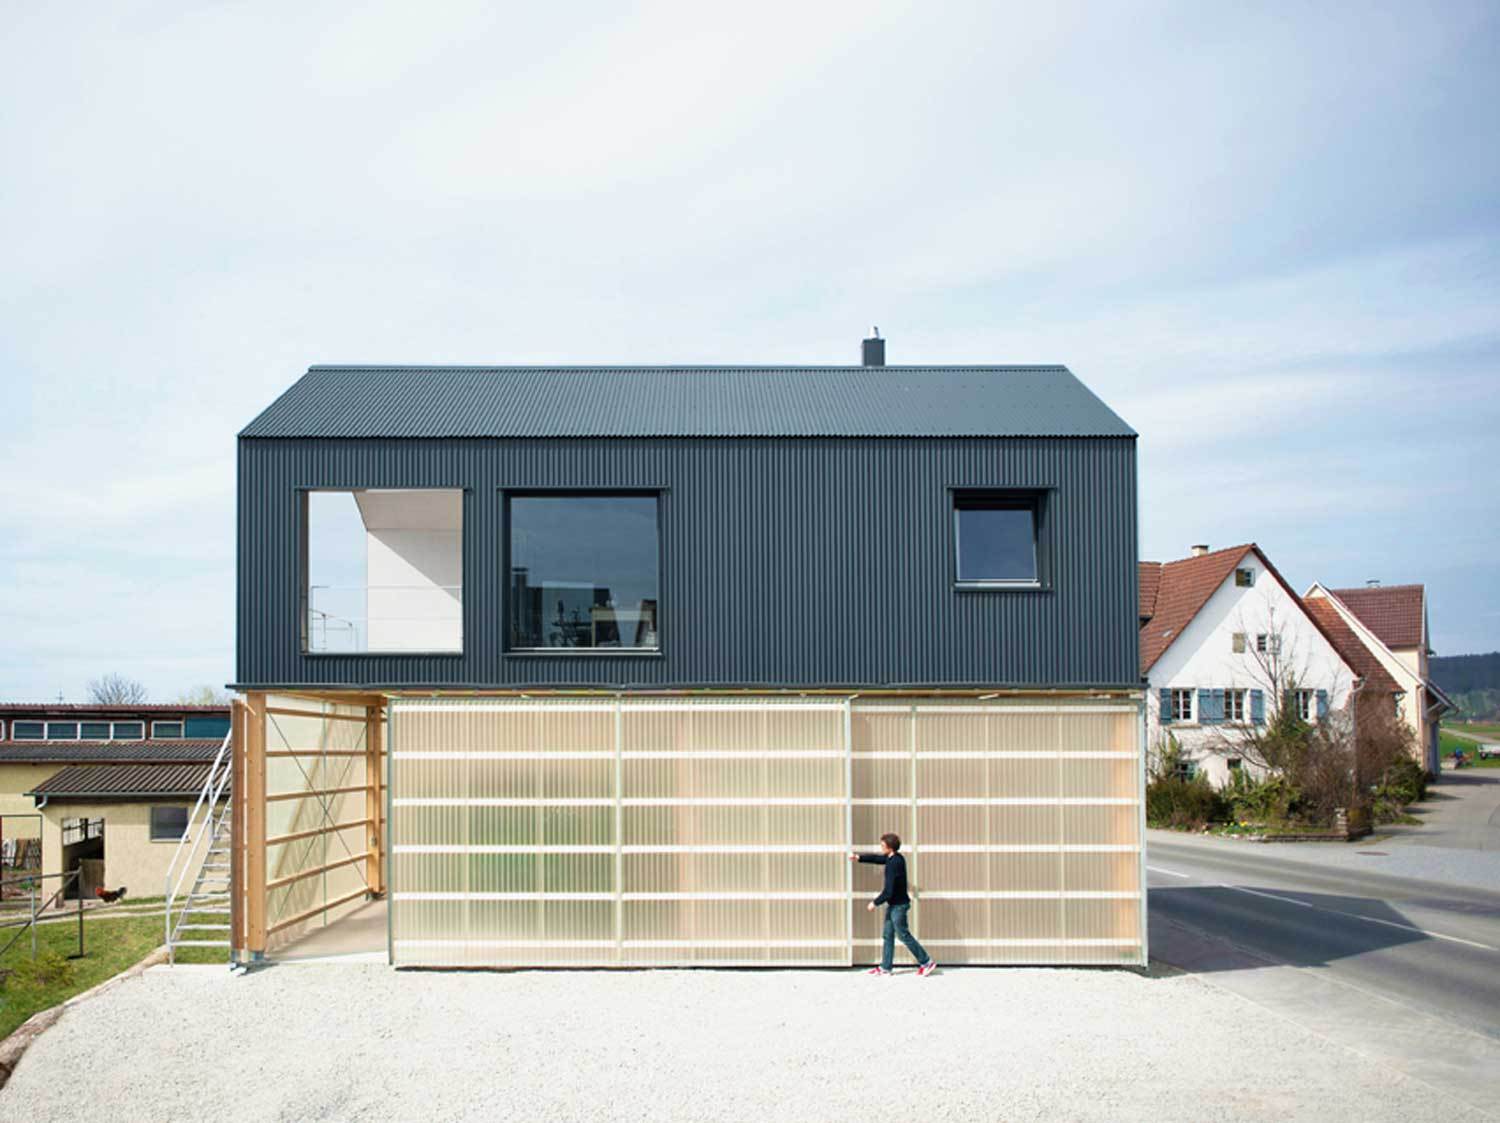 Casa-officina progettata nei dintorni di Tubinga dagli studi tedeschi Fabian Evers Architecture e Wezel Architektur